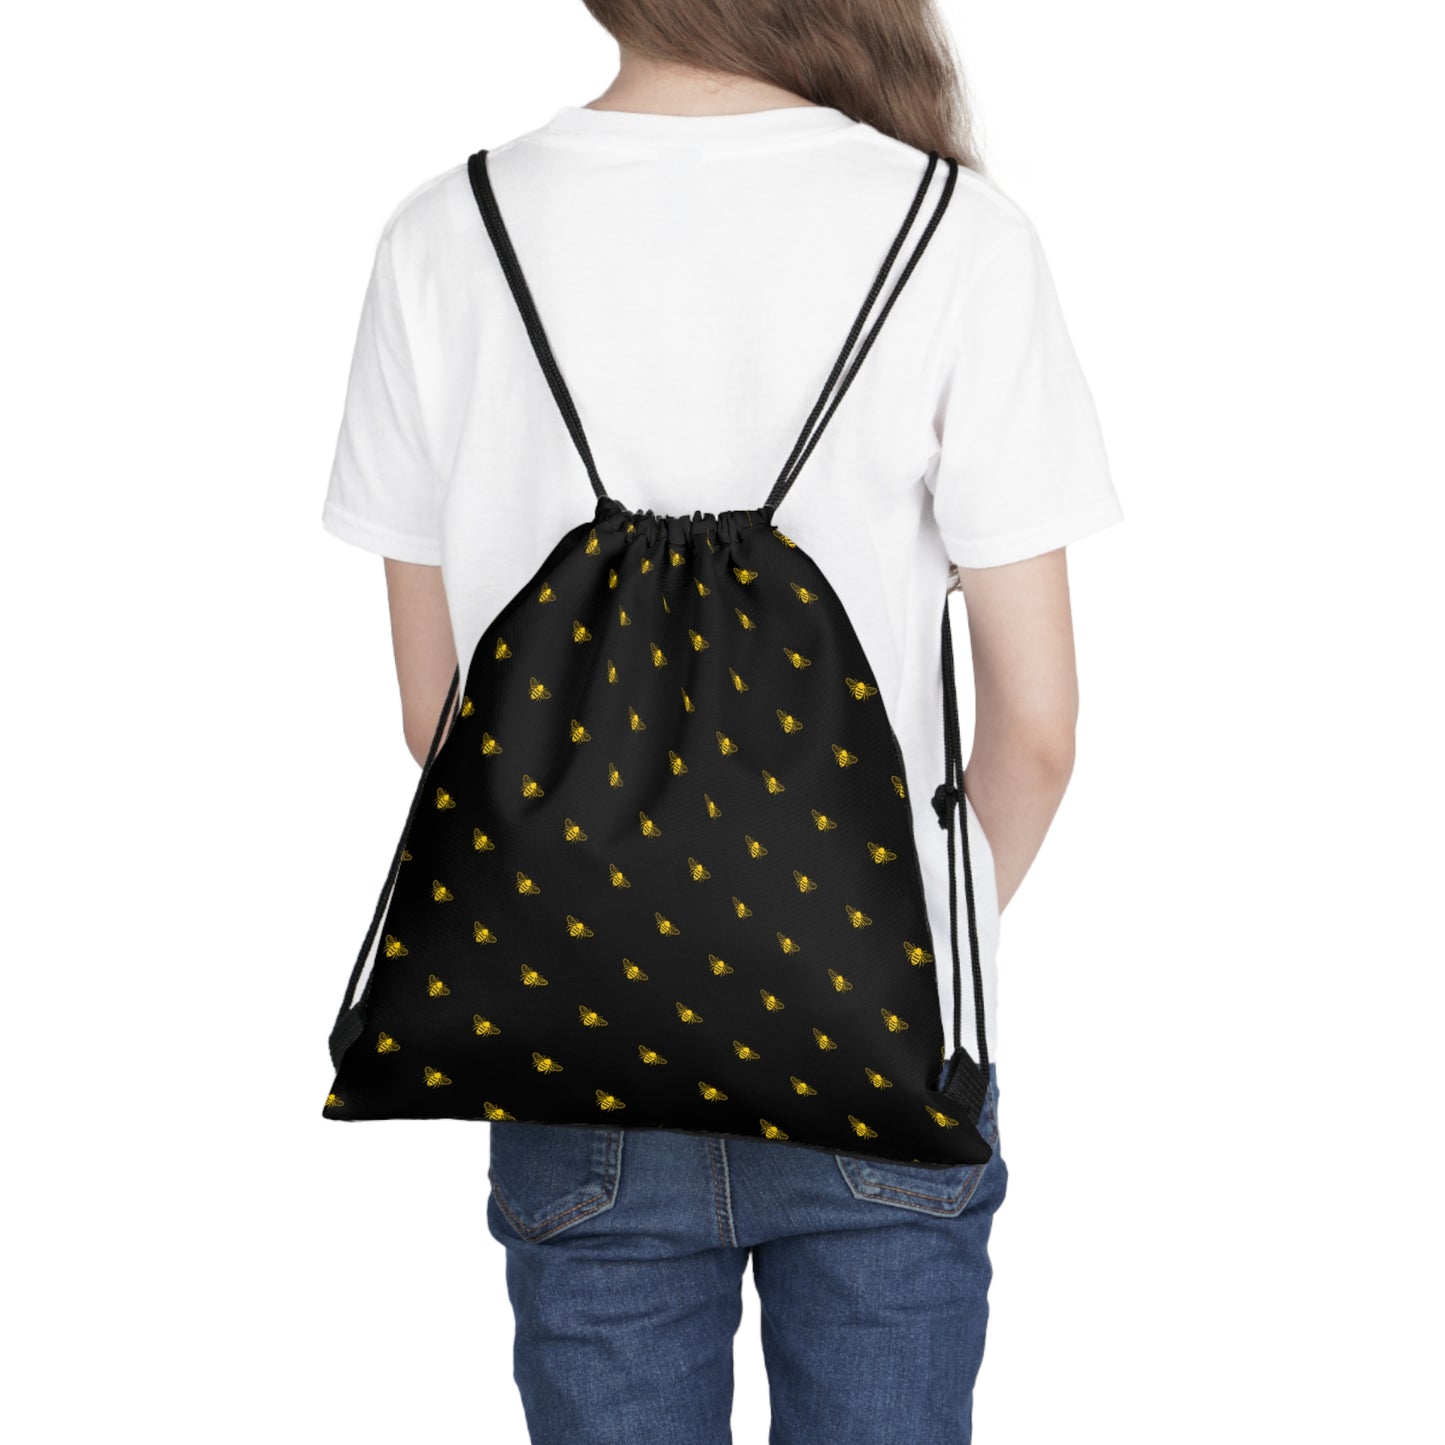 Honey Plus Co | Honey Bee Drawstring Backpack Style 7